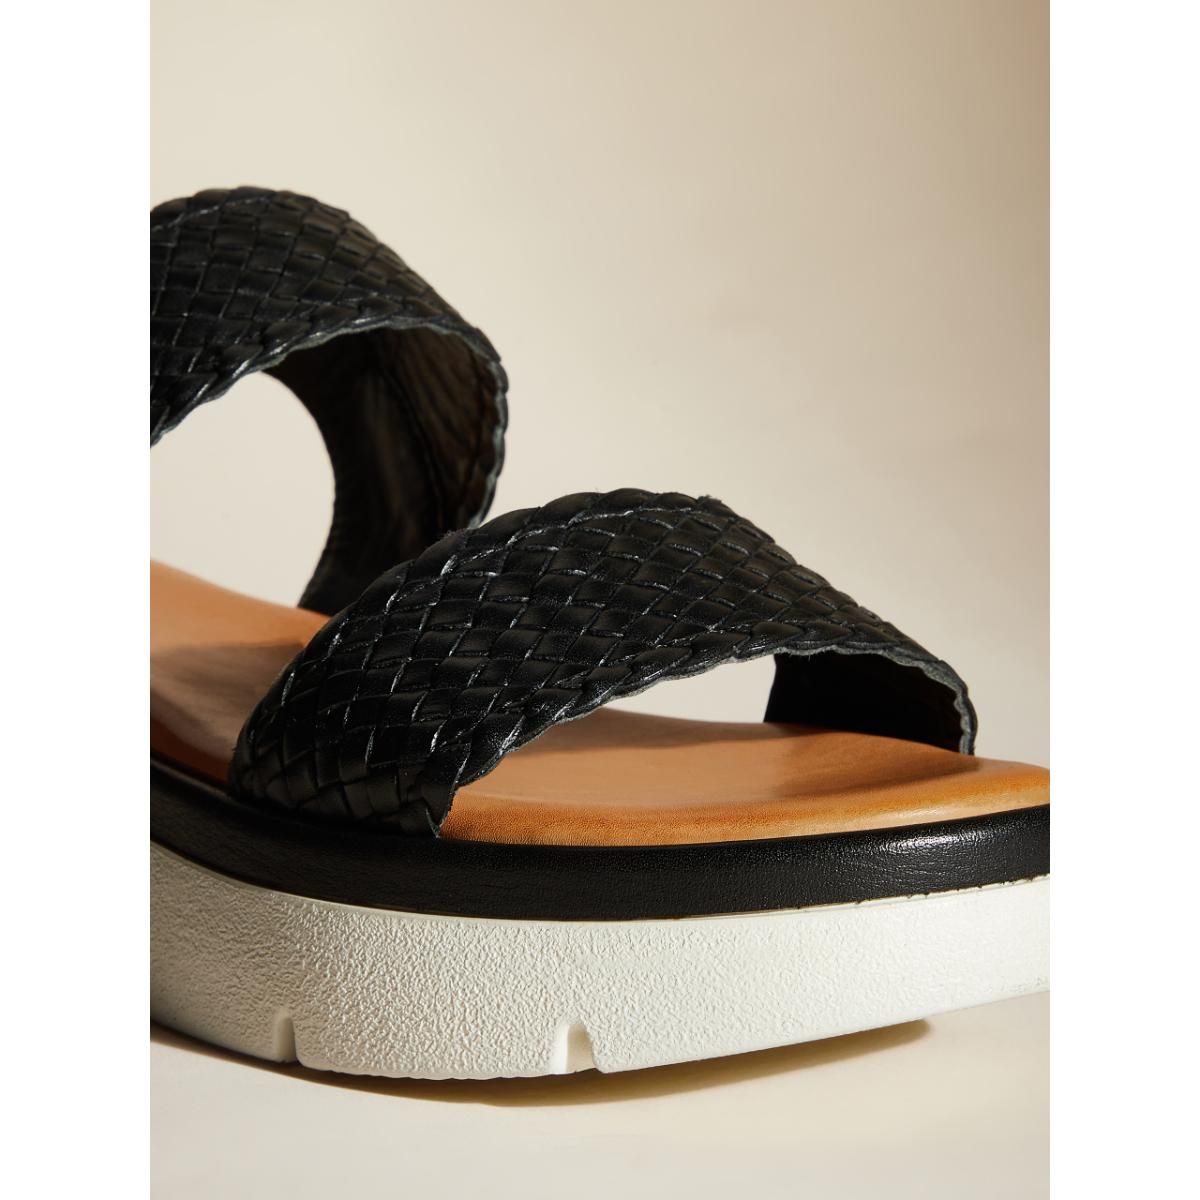 Brighton Haven Black Leather Woven Sandal, Size 7 | Blue leather sandals,  Woven leather sandals, Black sandals heels